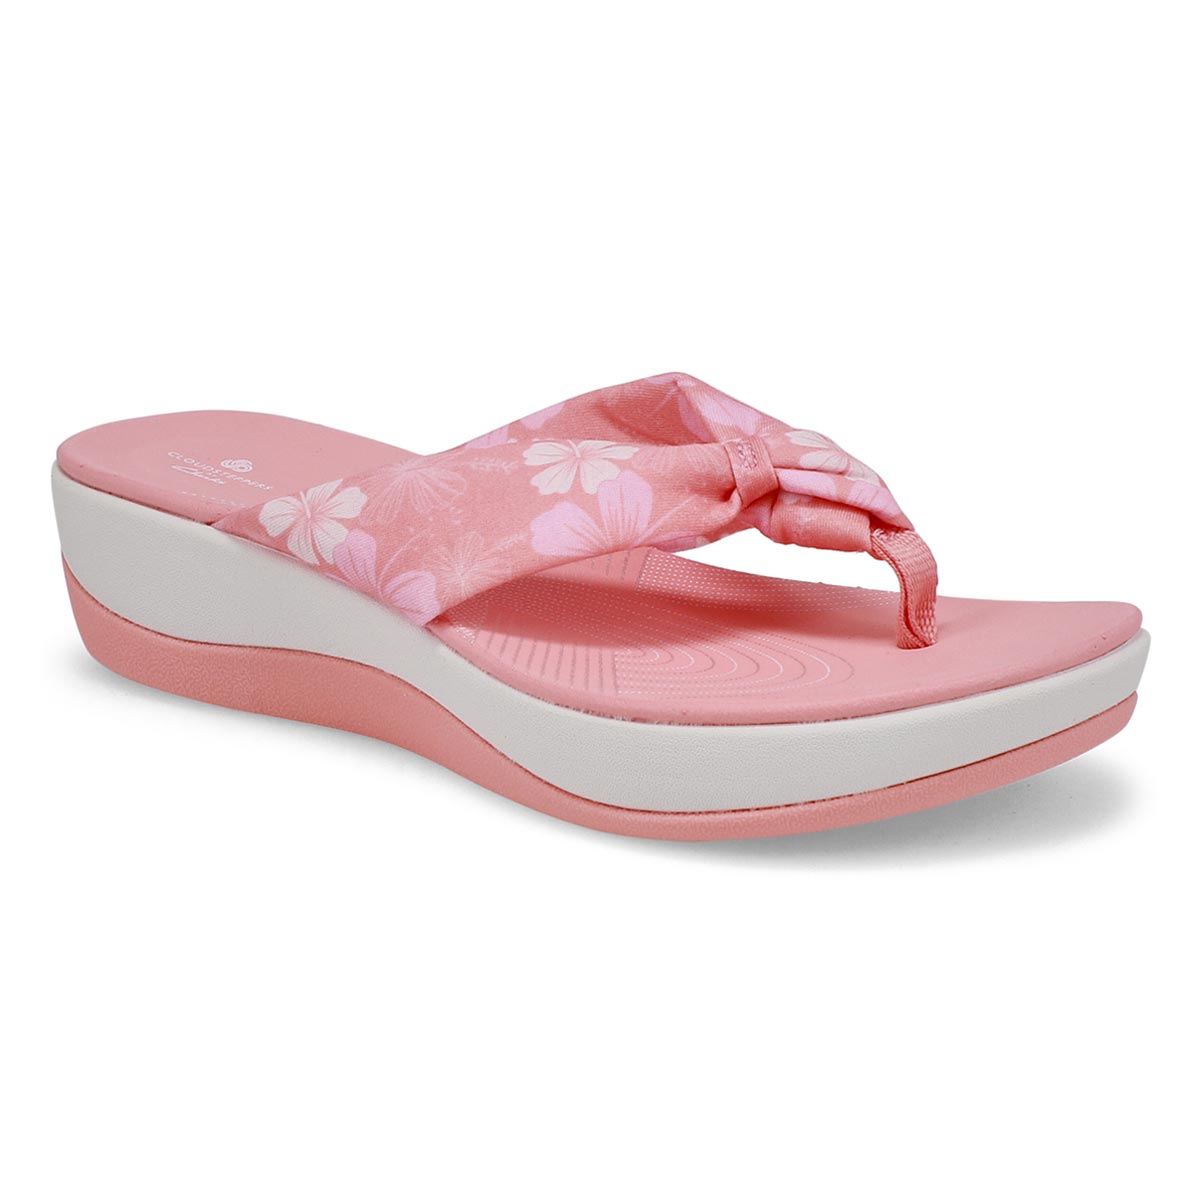 Women's Arla Glison Thong Wedge Sandal - Peach/Wht